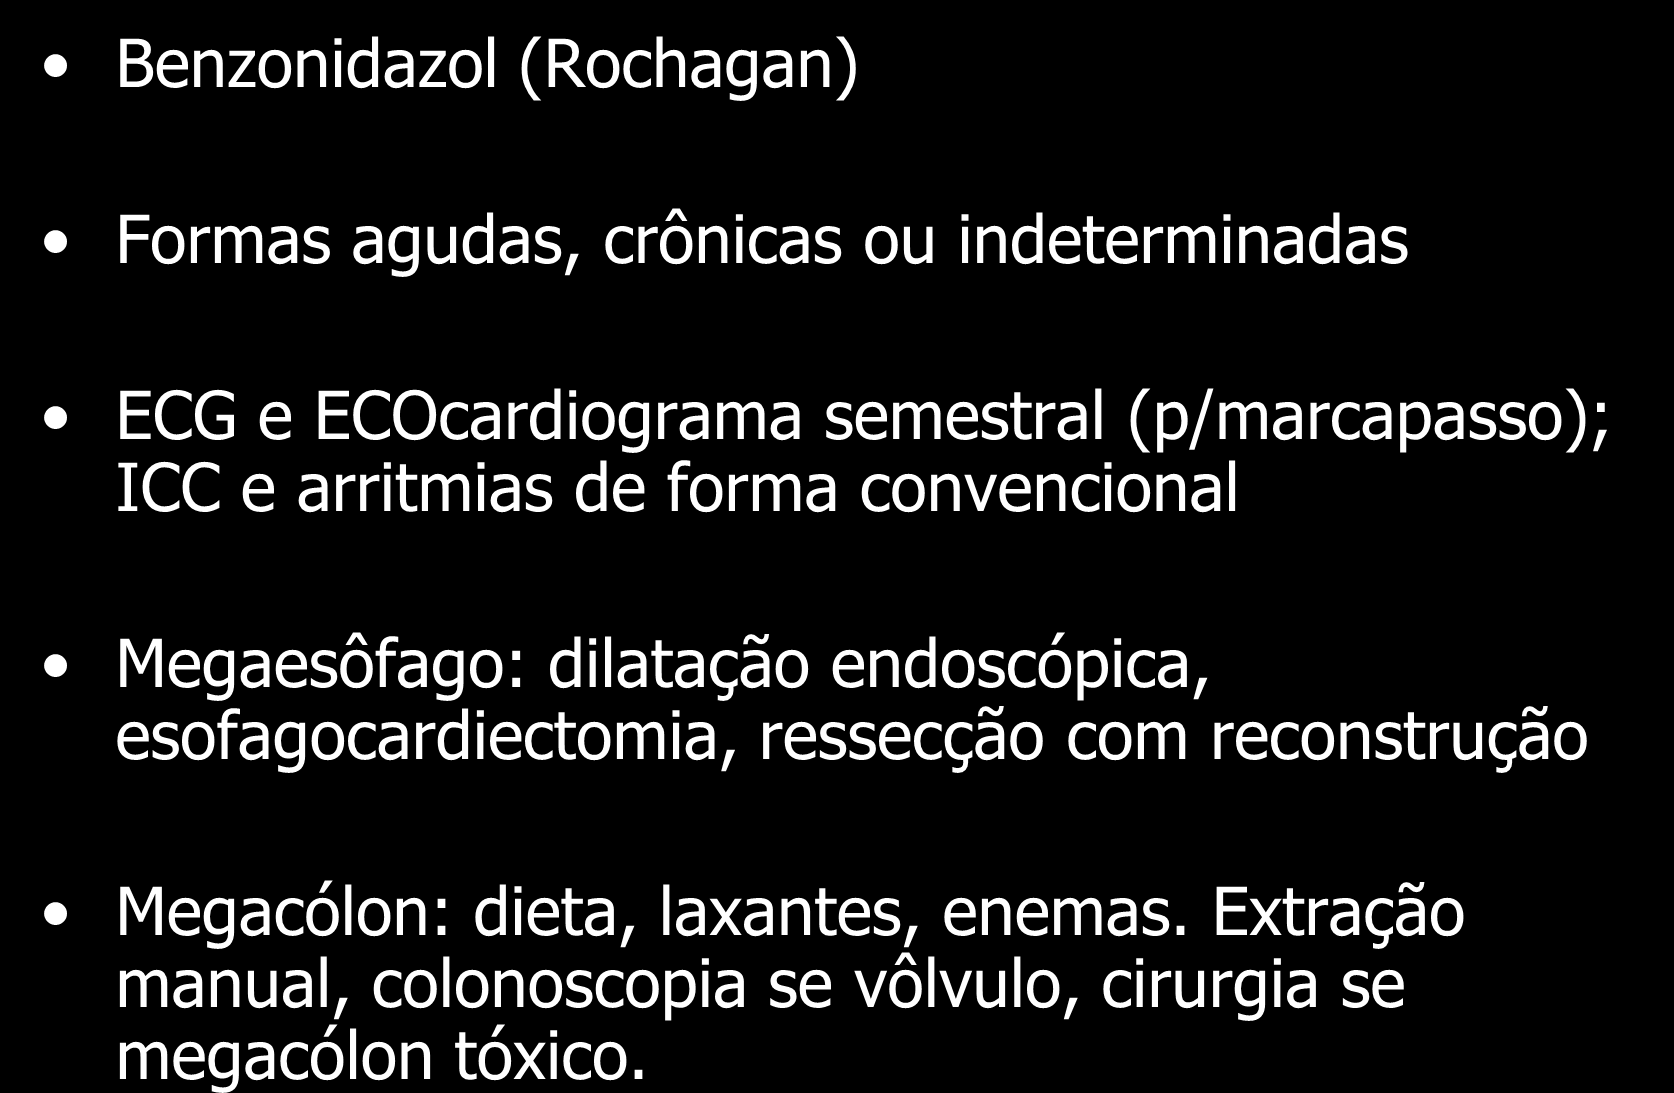 Benzonidazol (Rochagan) Tratamento Formas agudas, crônicas ou indeterminadas ECG e ECOcardiograma semestral (p/marcapasso); ICC e arritmias de forma convencional Megaesôfago: